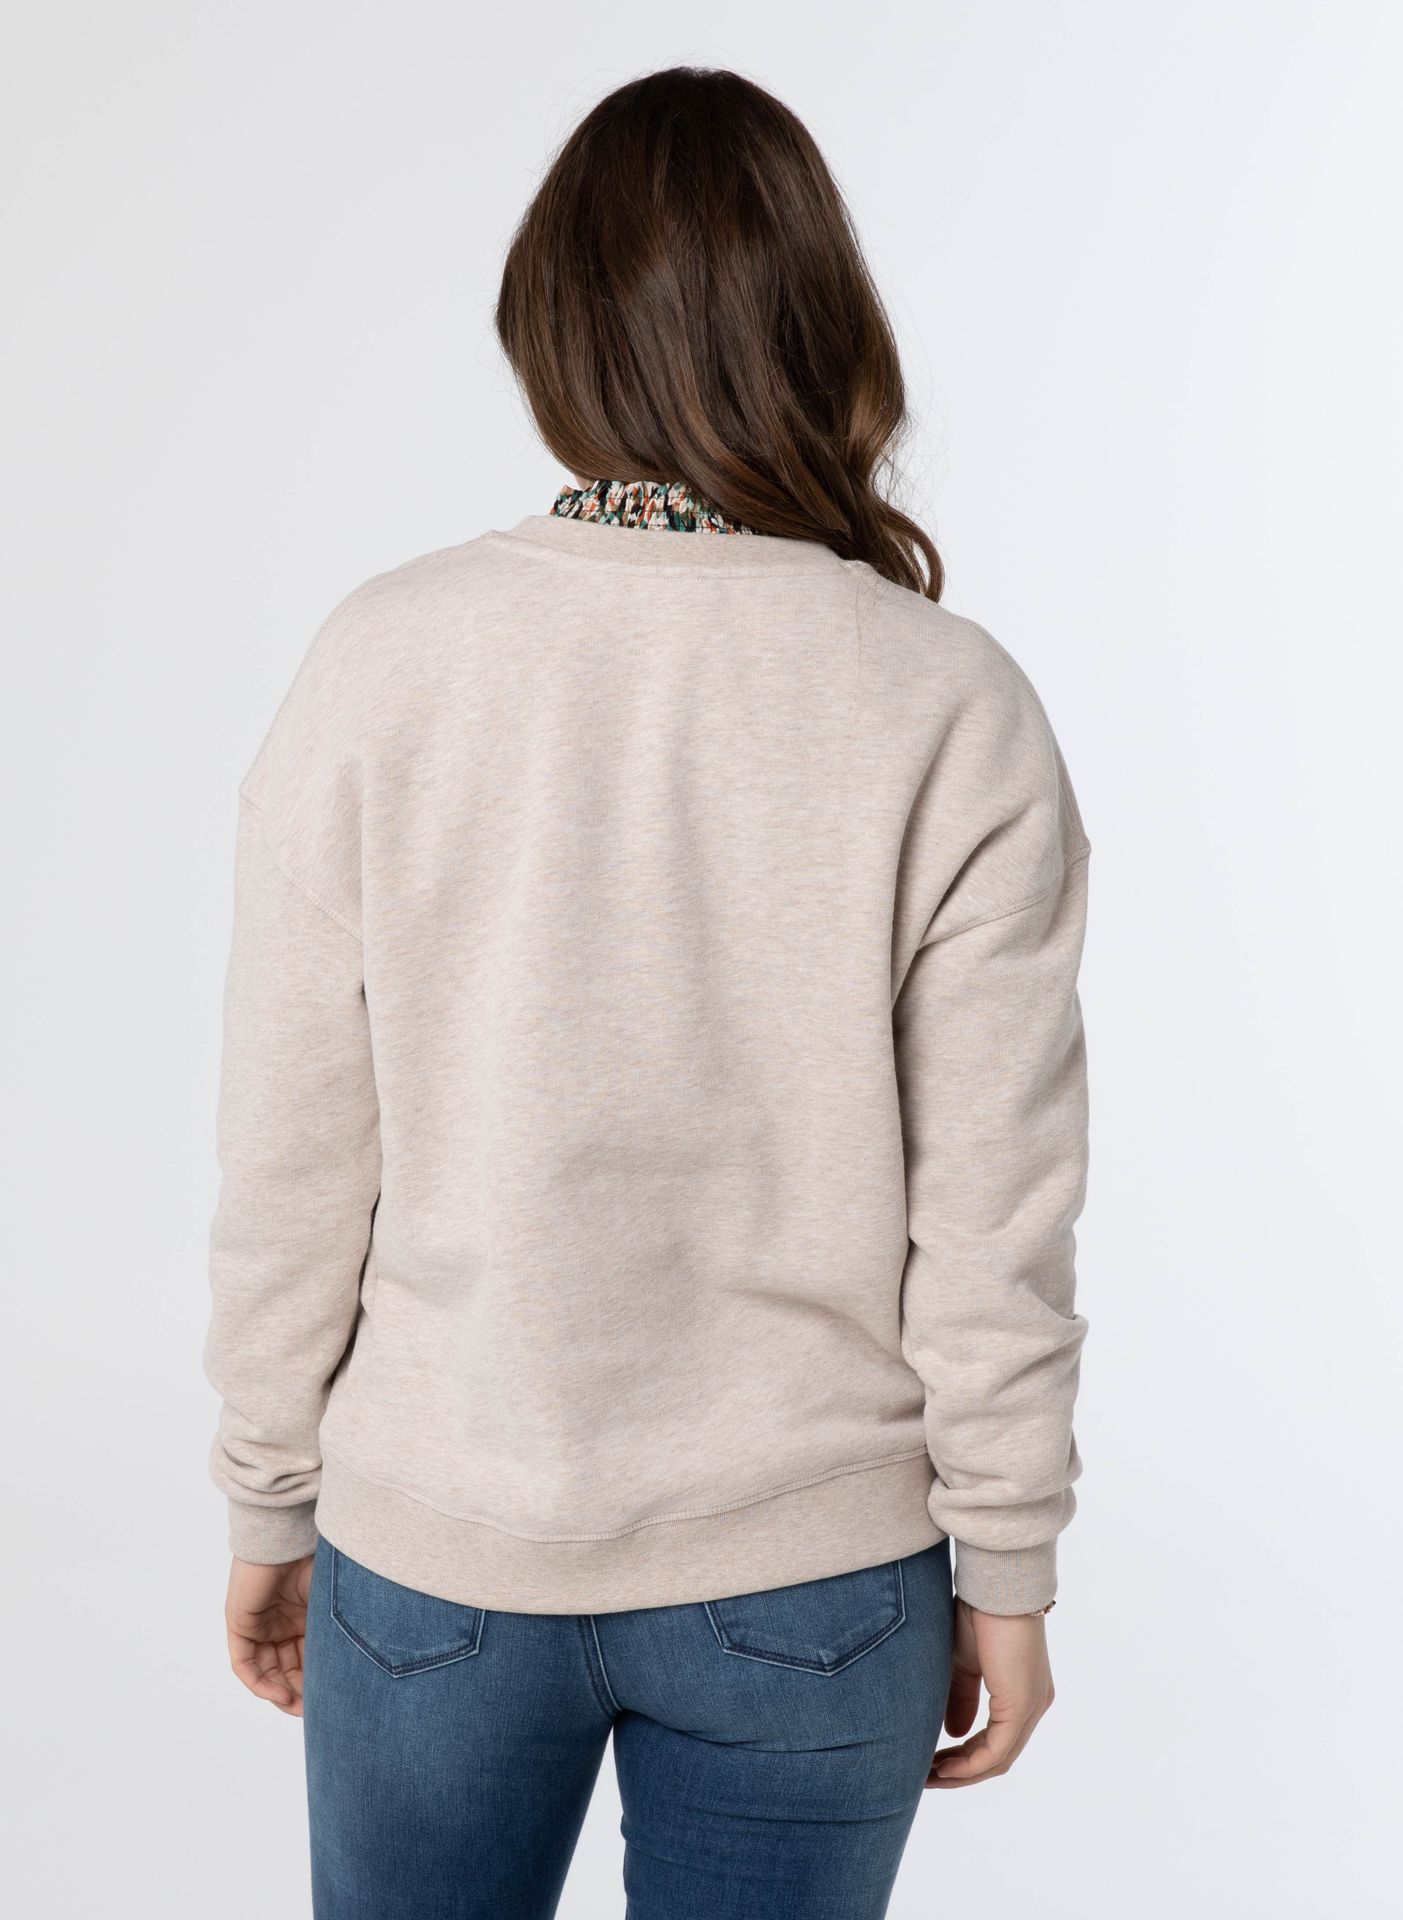 Norah Trui beige sweater sand melange 212455-151